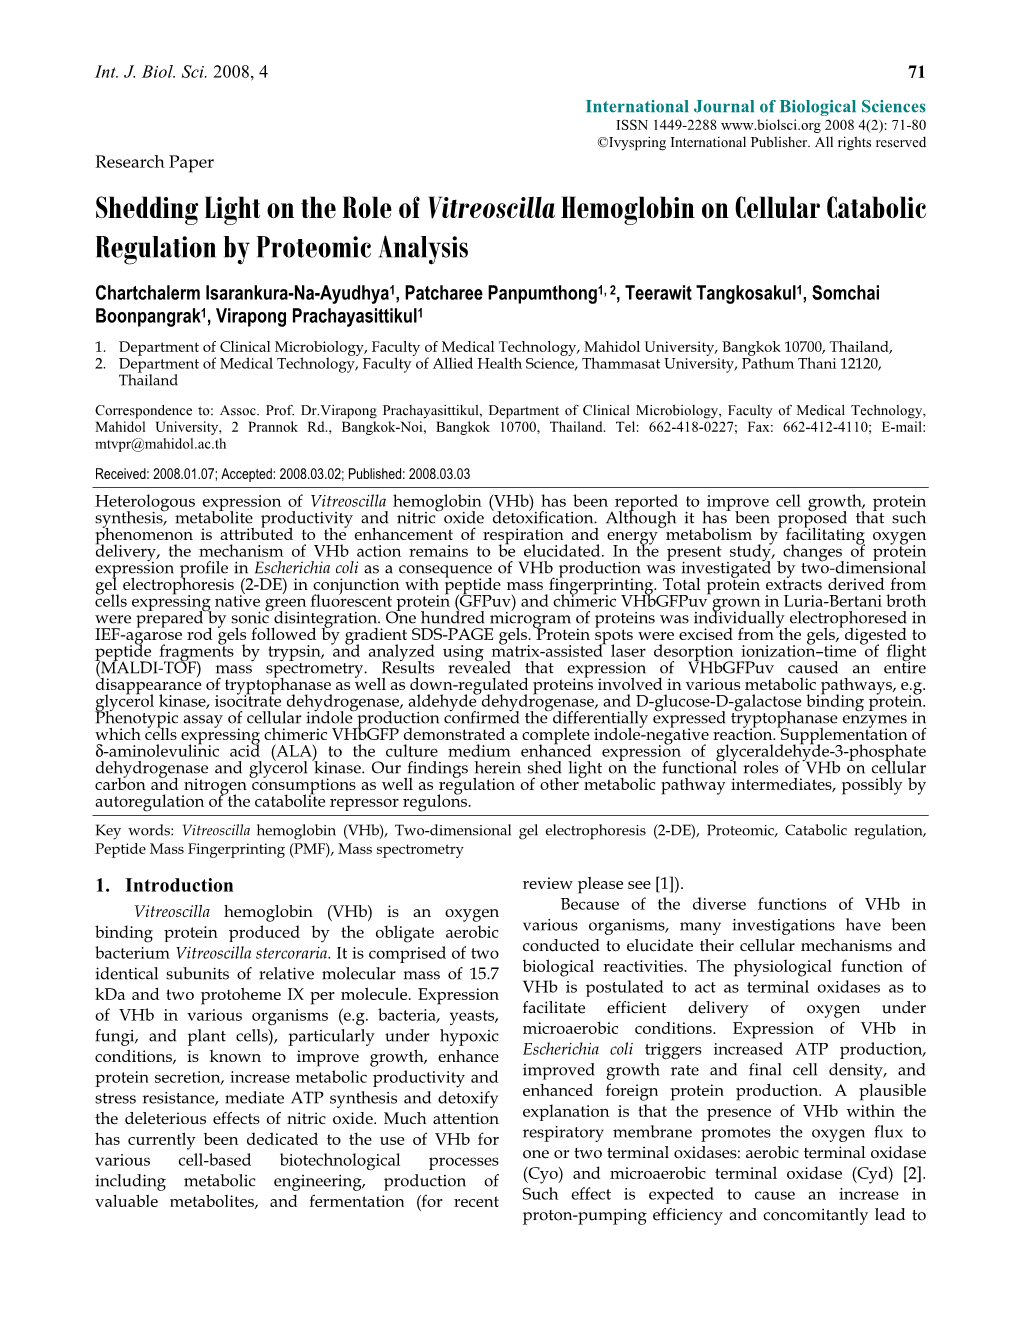 Shedding Light on the Role of Vitreoscillahemoglobin on Cellular